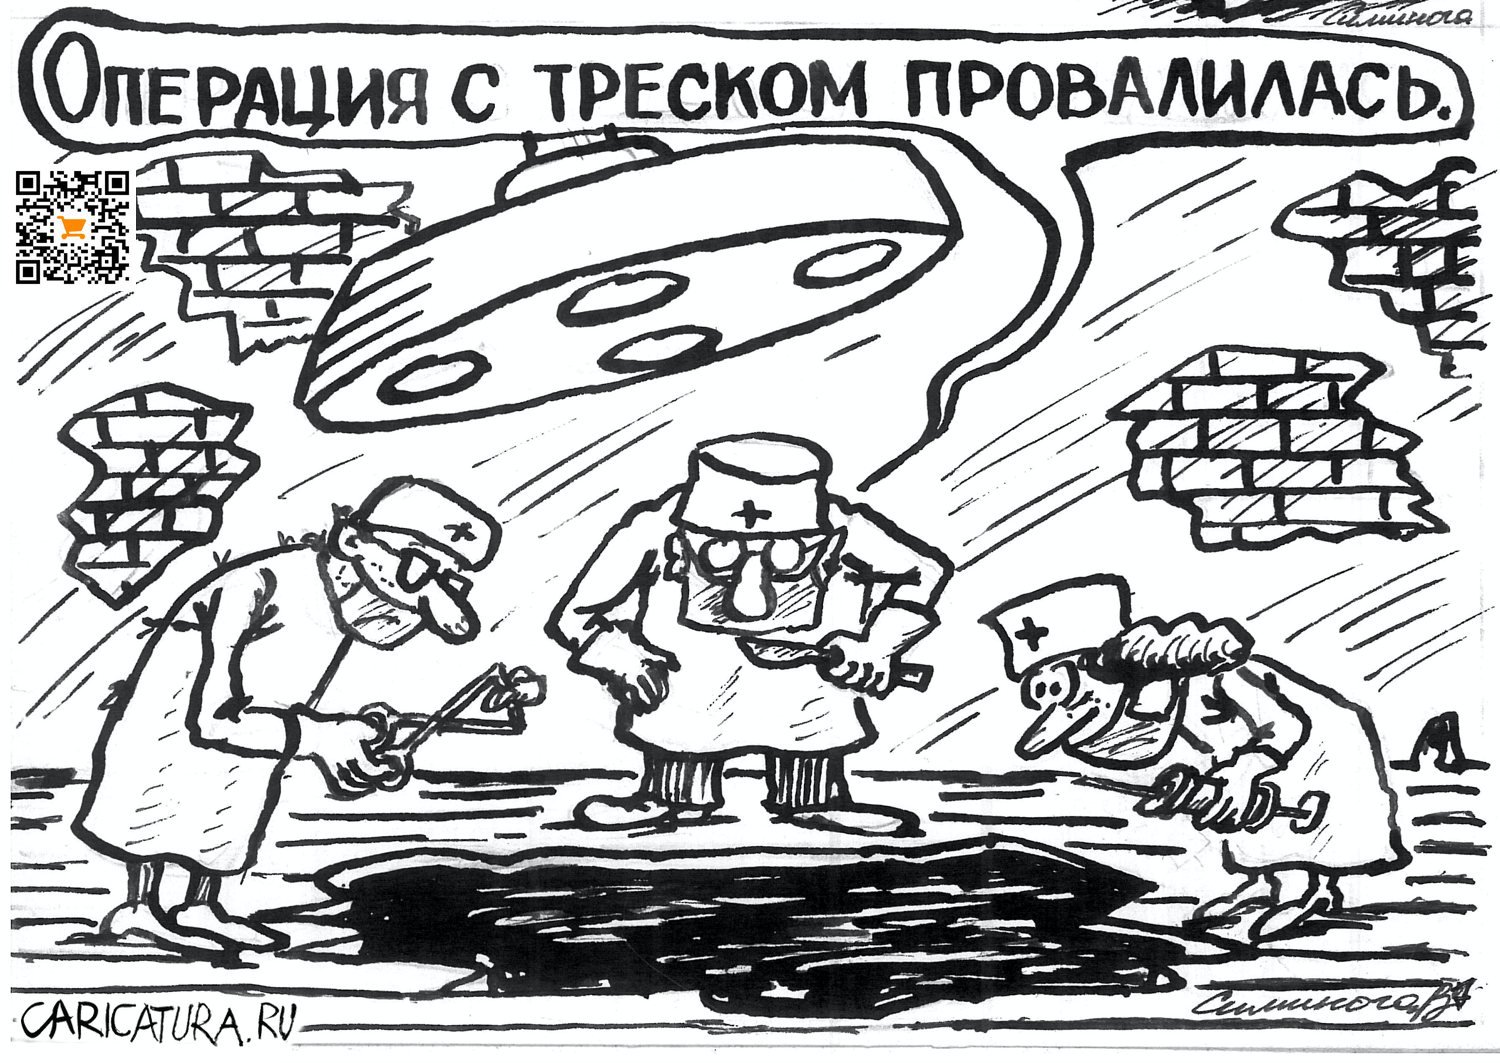 Карикатура "Провал", Vadim Siminoga